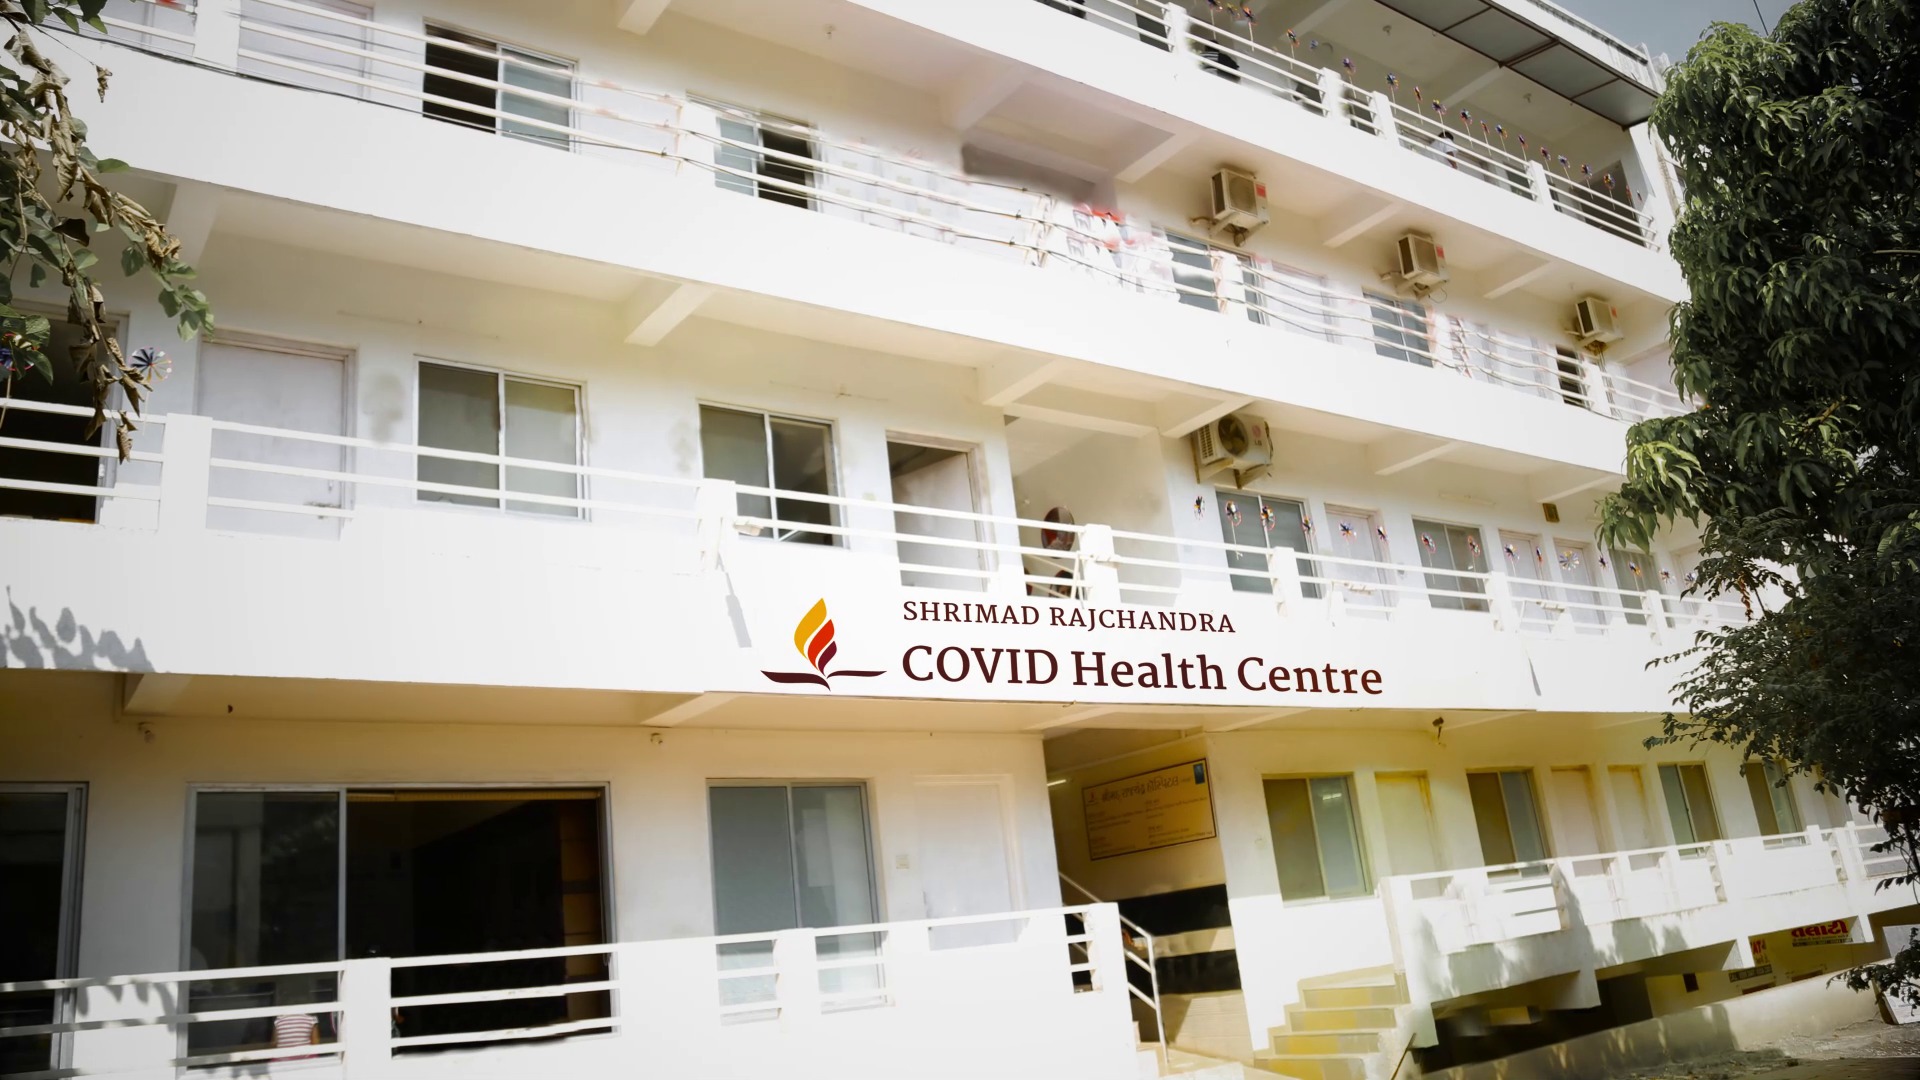 Outside the new Covid health centre in Gujarat, India